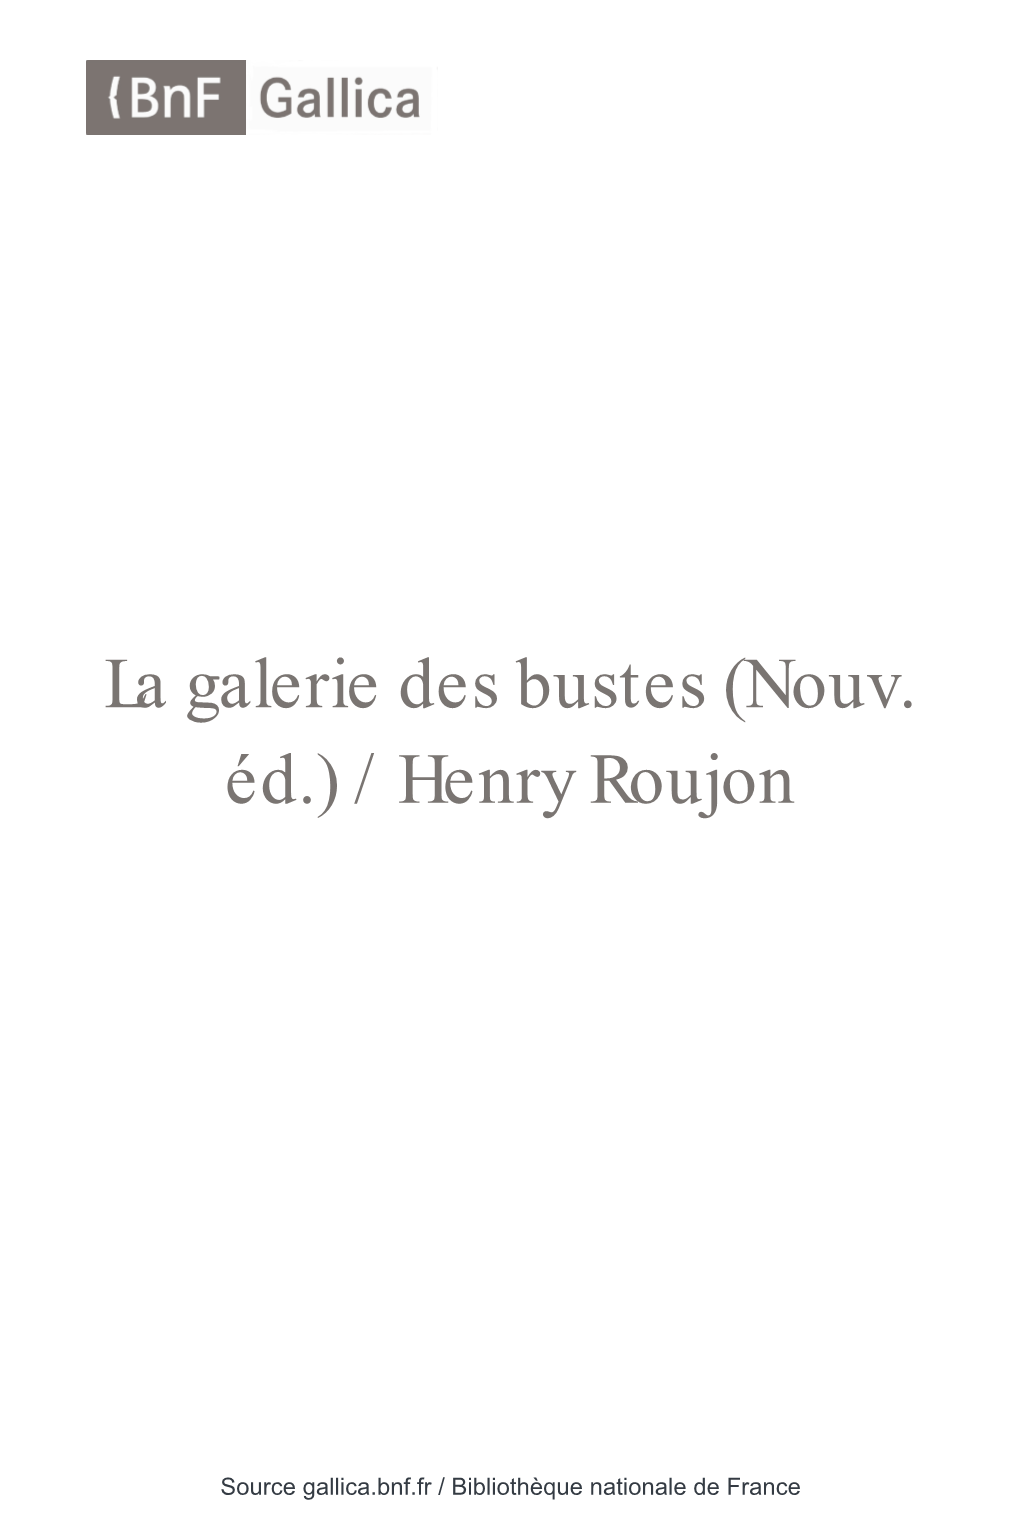 Henry Roujon